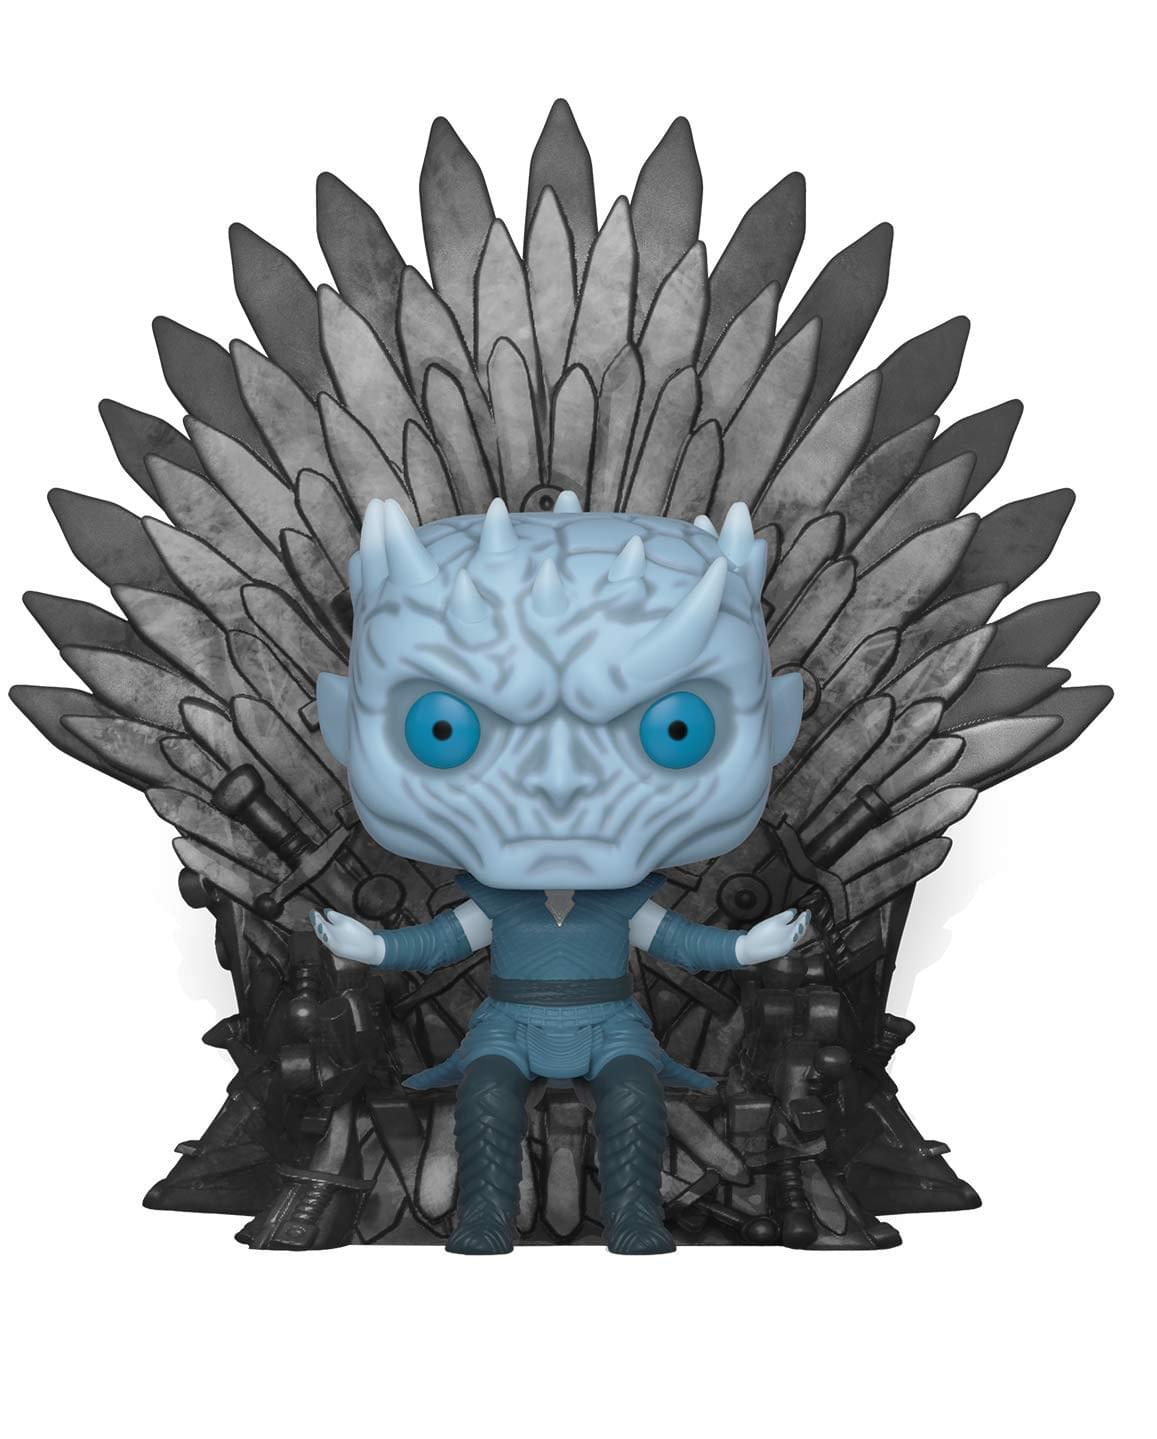 Game of Thrones Funko POP Vinyl Figure - Night King on Iron Throne